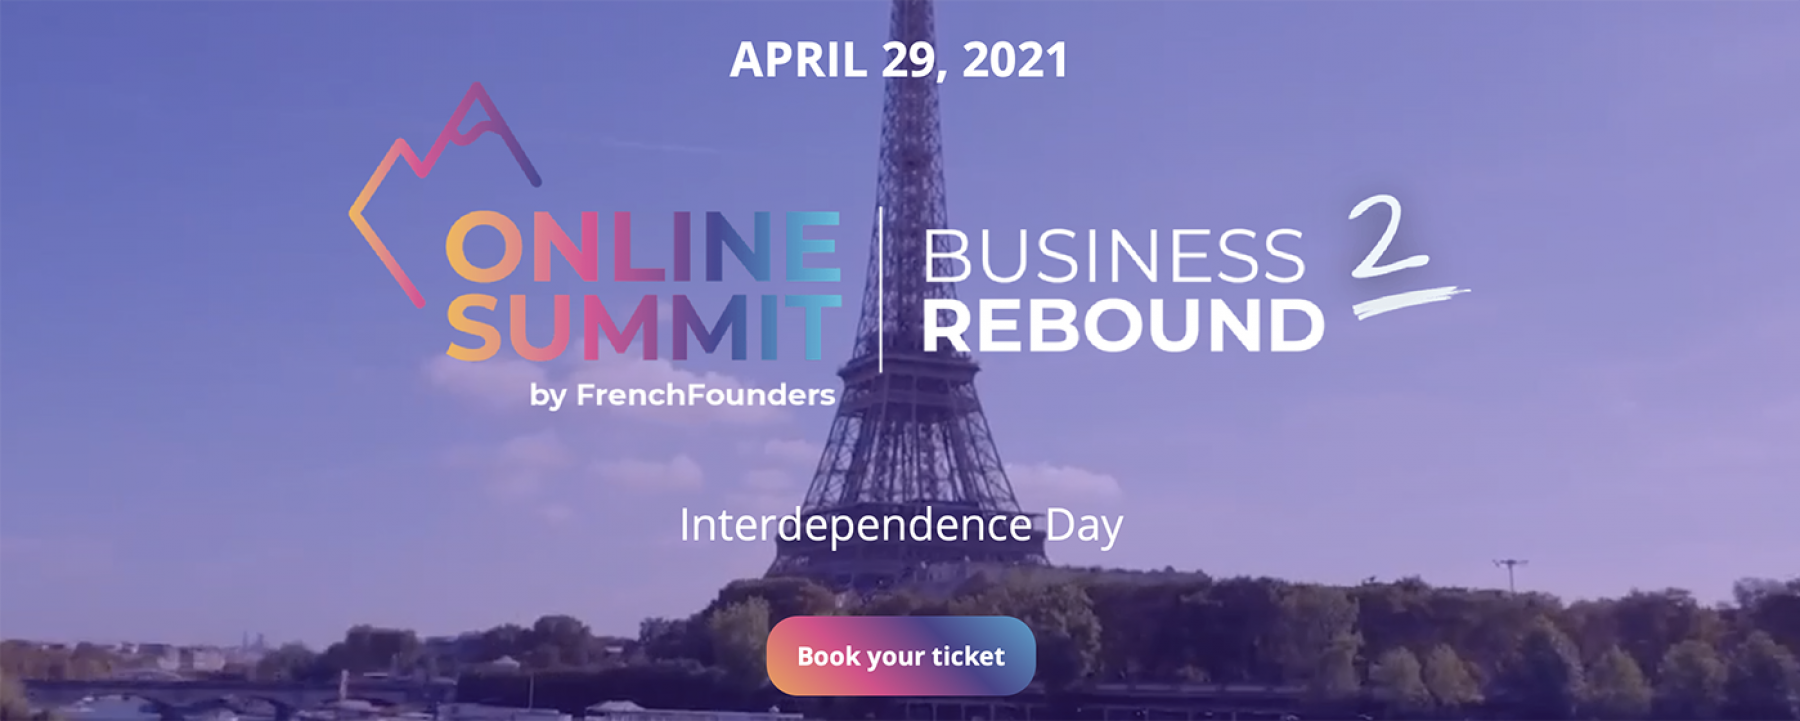 Online Summit : Business Rebound 2, organisé par FrenchFounders le 29 avril 2021